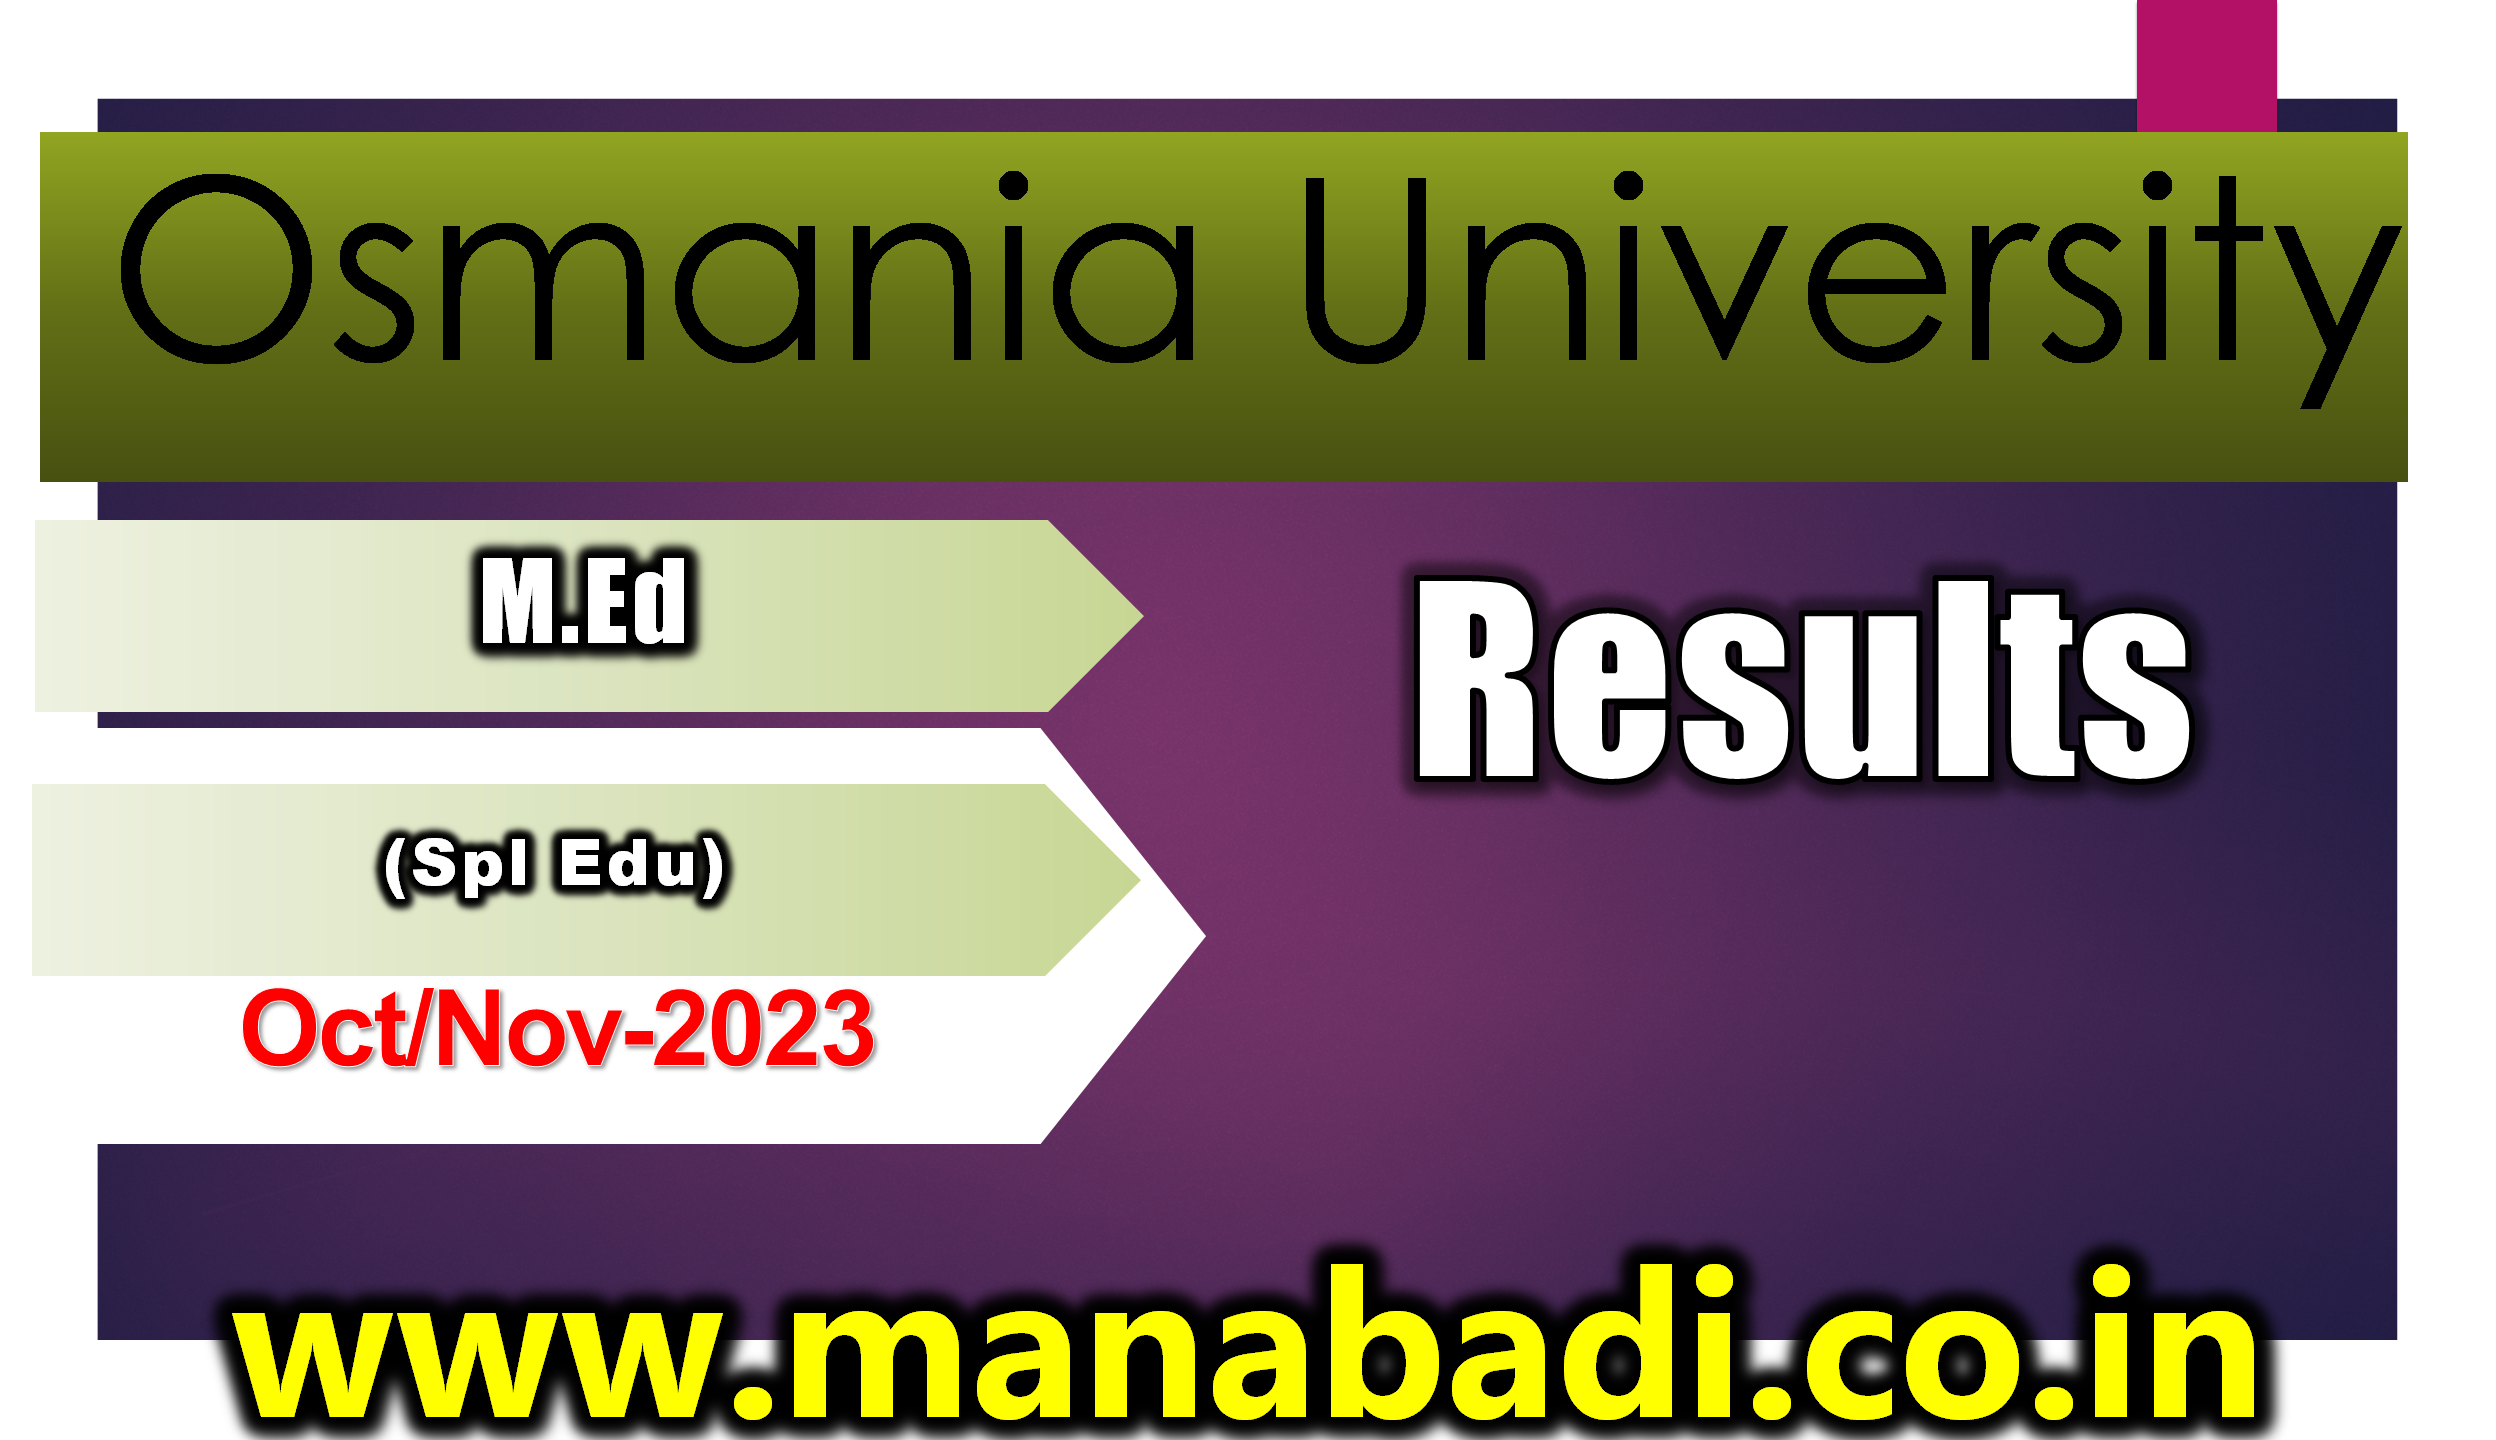 Osmania University M.Ed (Spl Edu) Oct/Nov-2023 Exam Results